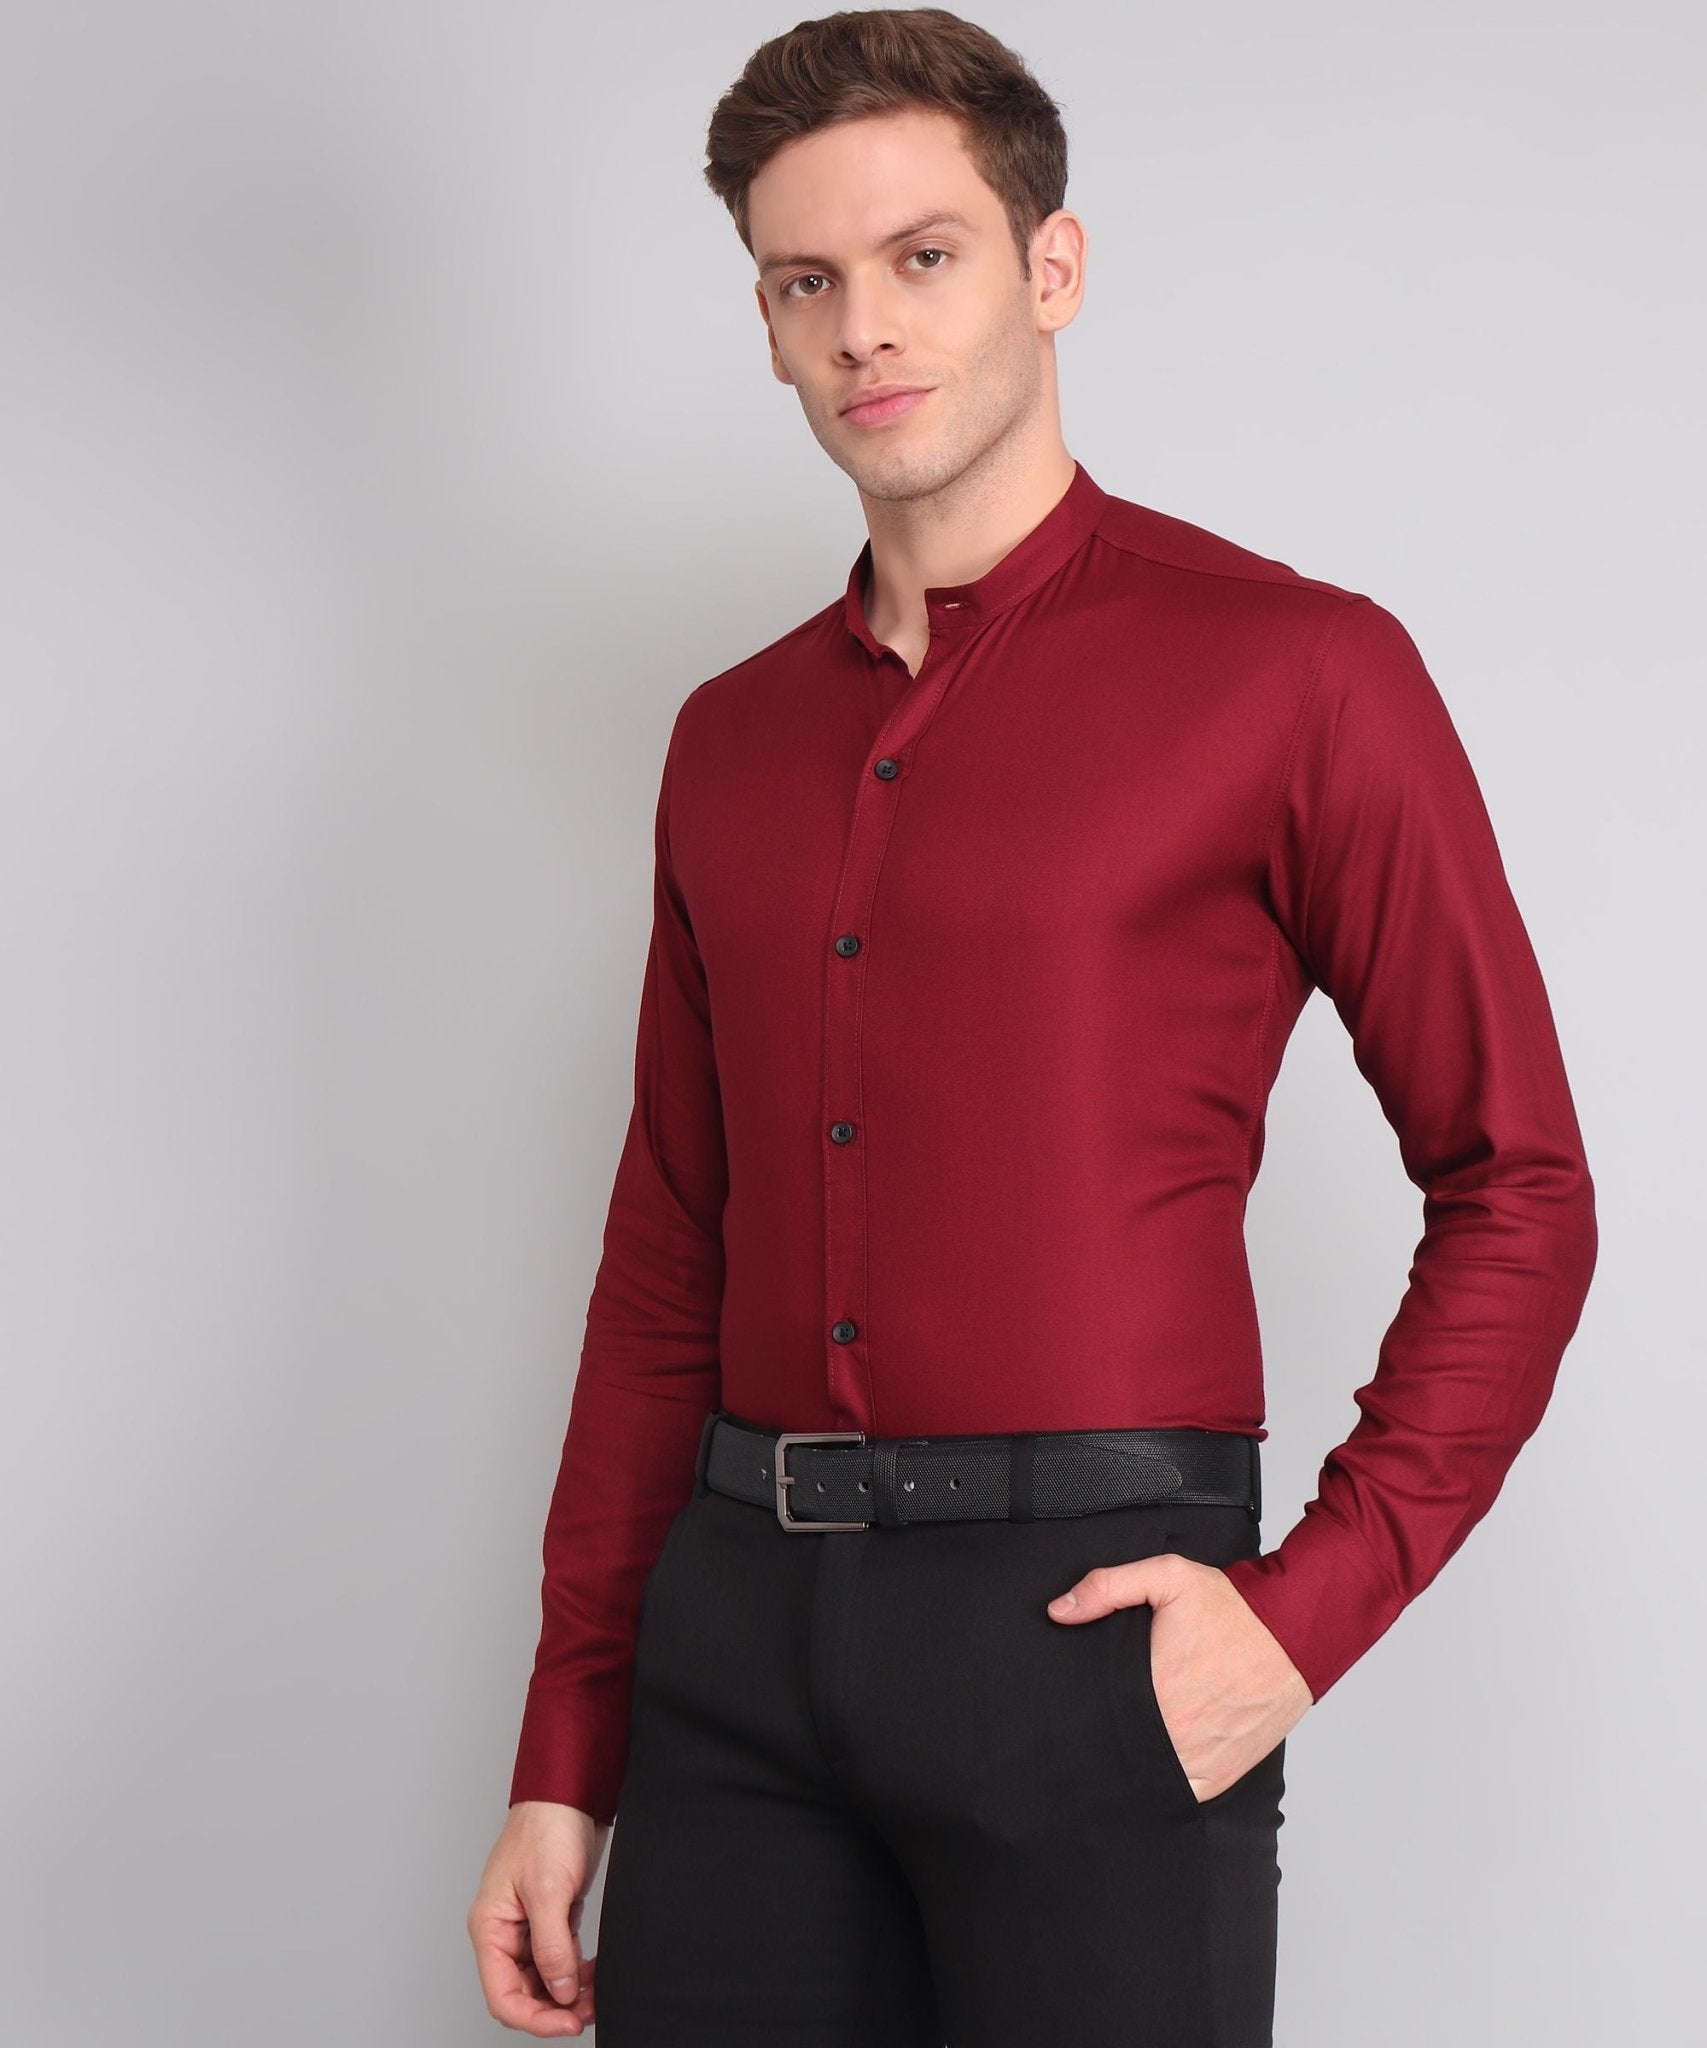 TryBuy Premium Luxurious Full Sleeves Mandarin Collar Maroon Cotton Casual Shirt for Men - TryBuy® USA🇺🇸